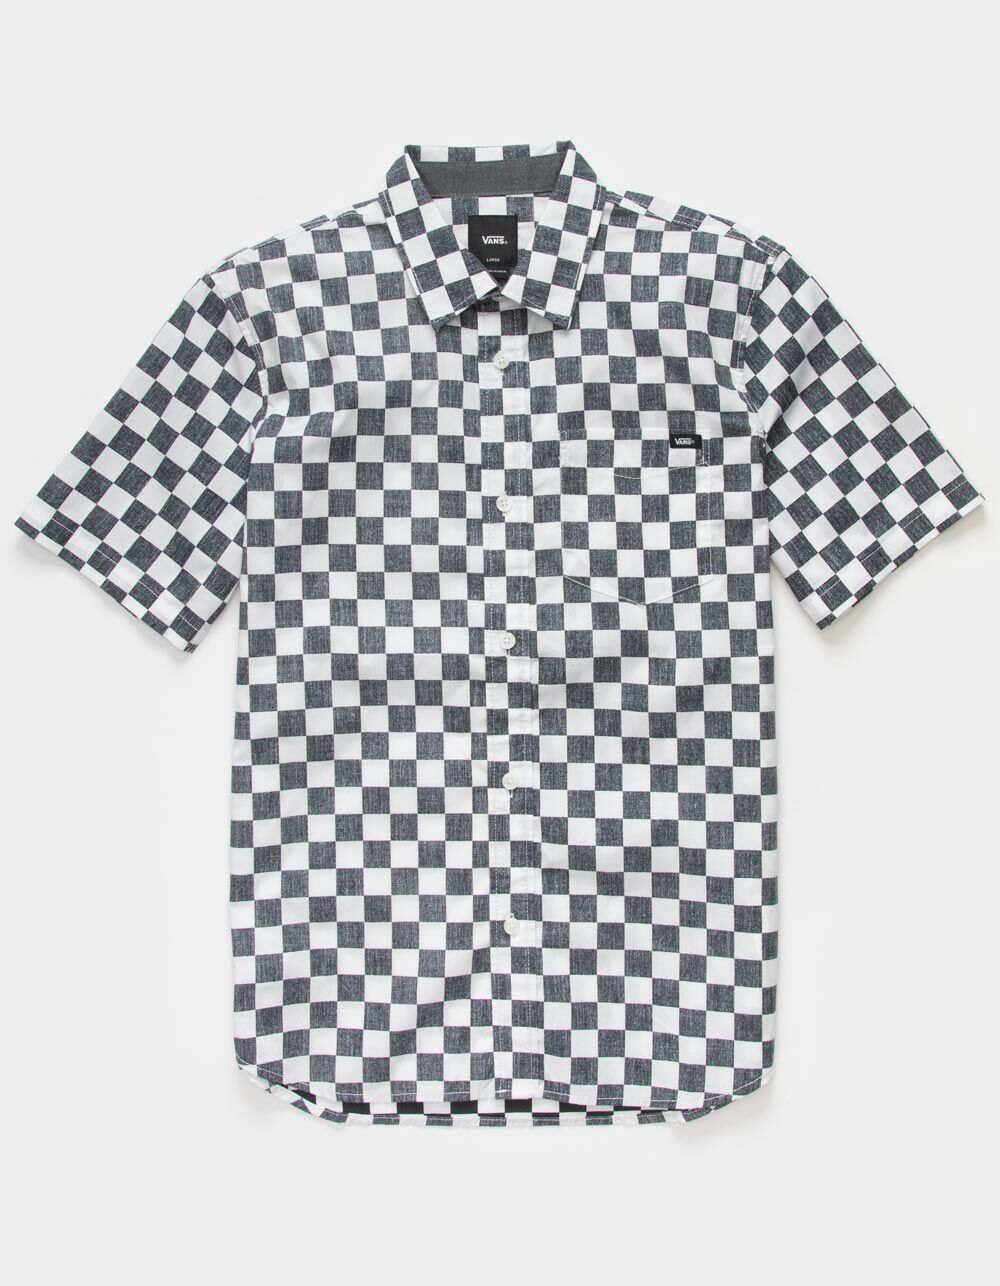 VANS Cypress Checker II Boys Shirt image number 0